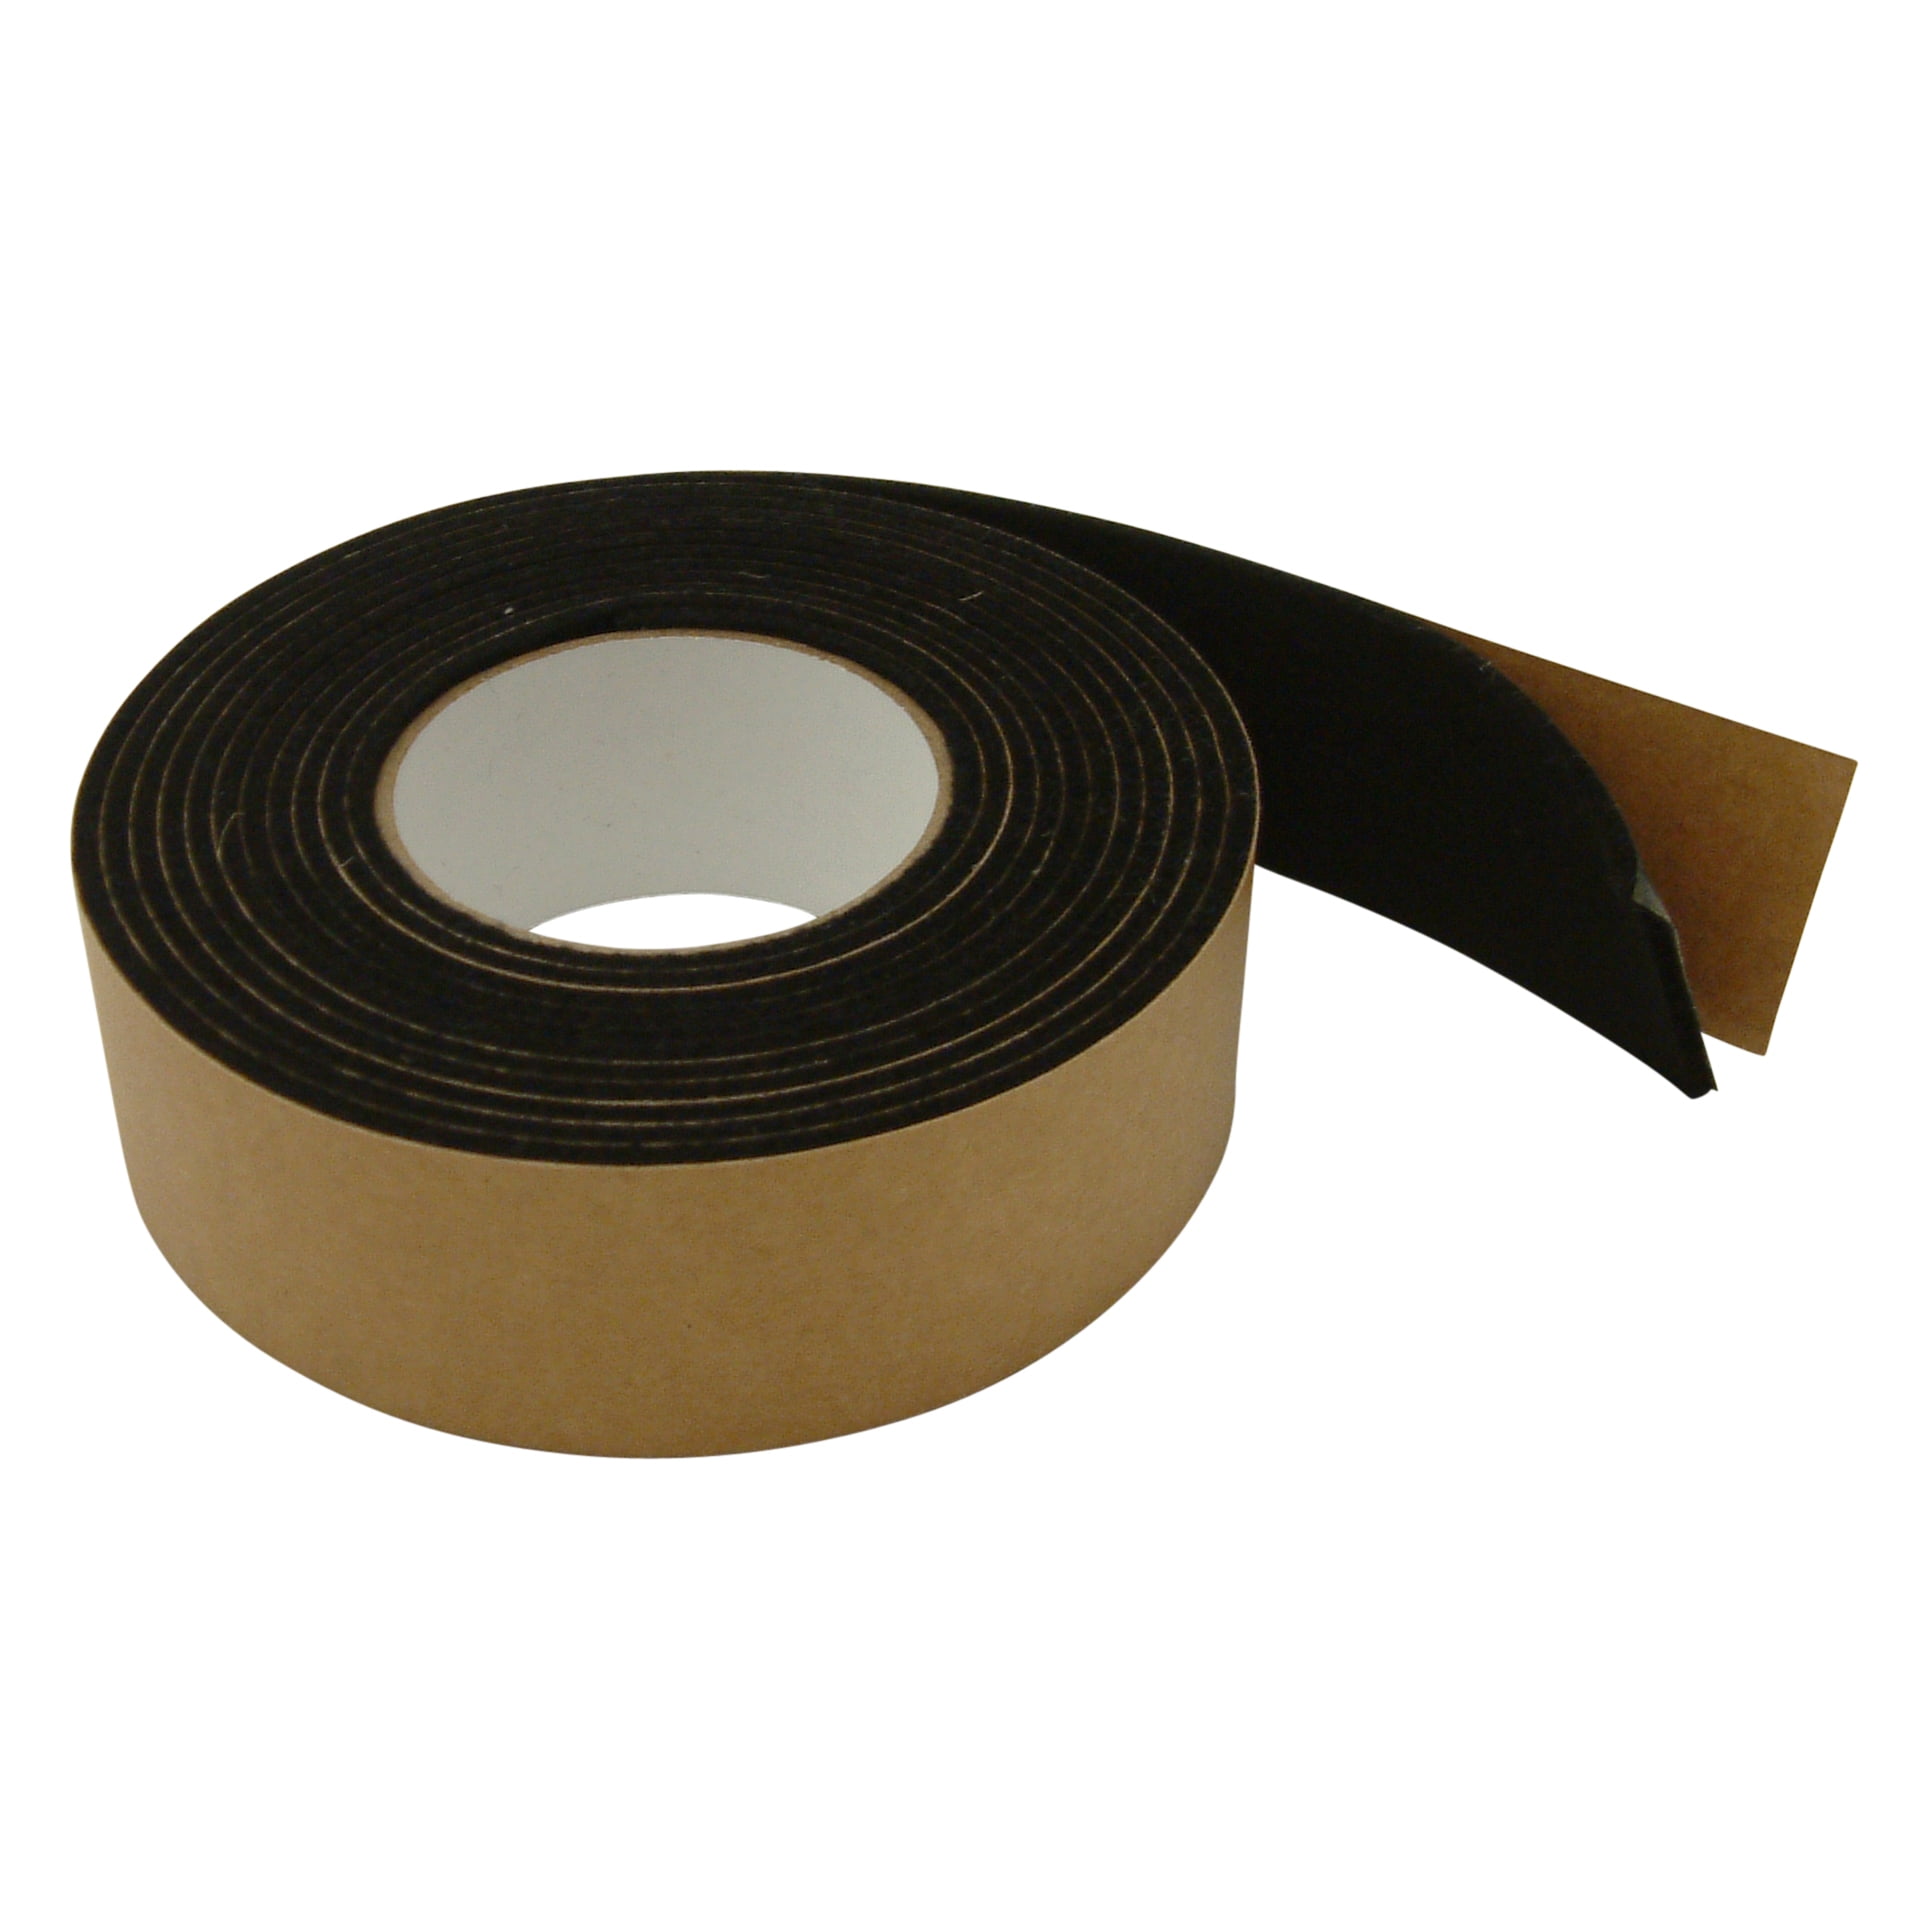 JVCC FELT-08 Polyester Felt Tape: 2 in. x 10 ft. (3mm thickness